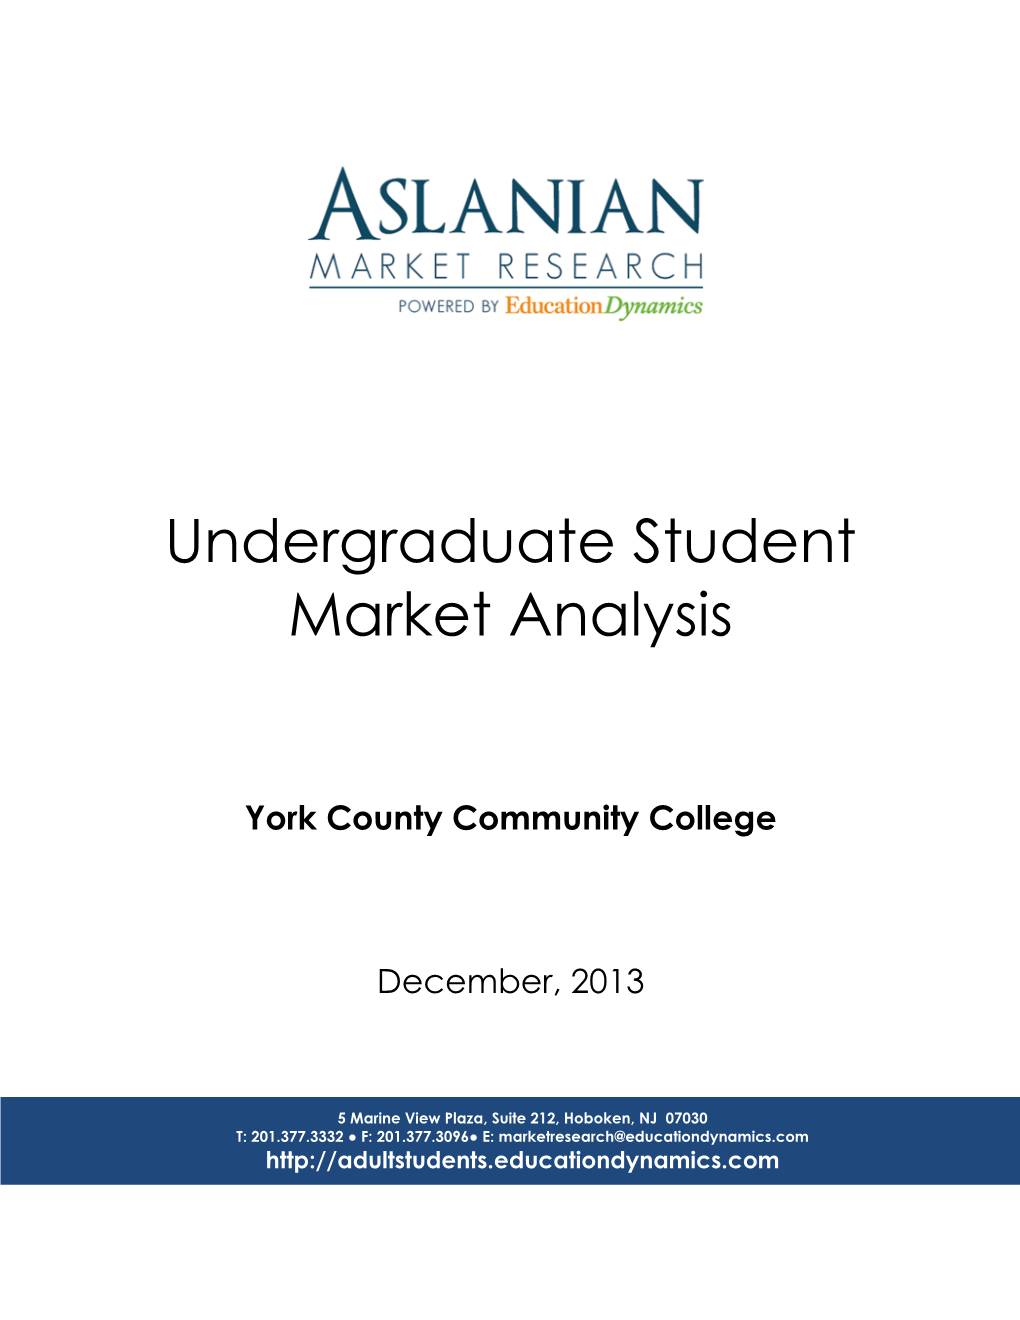 Undergraduate Student Market Analysis